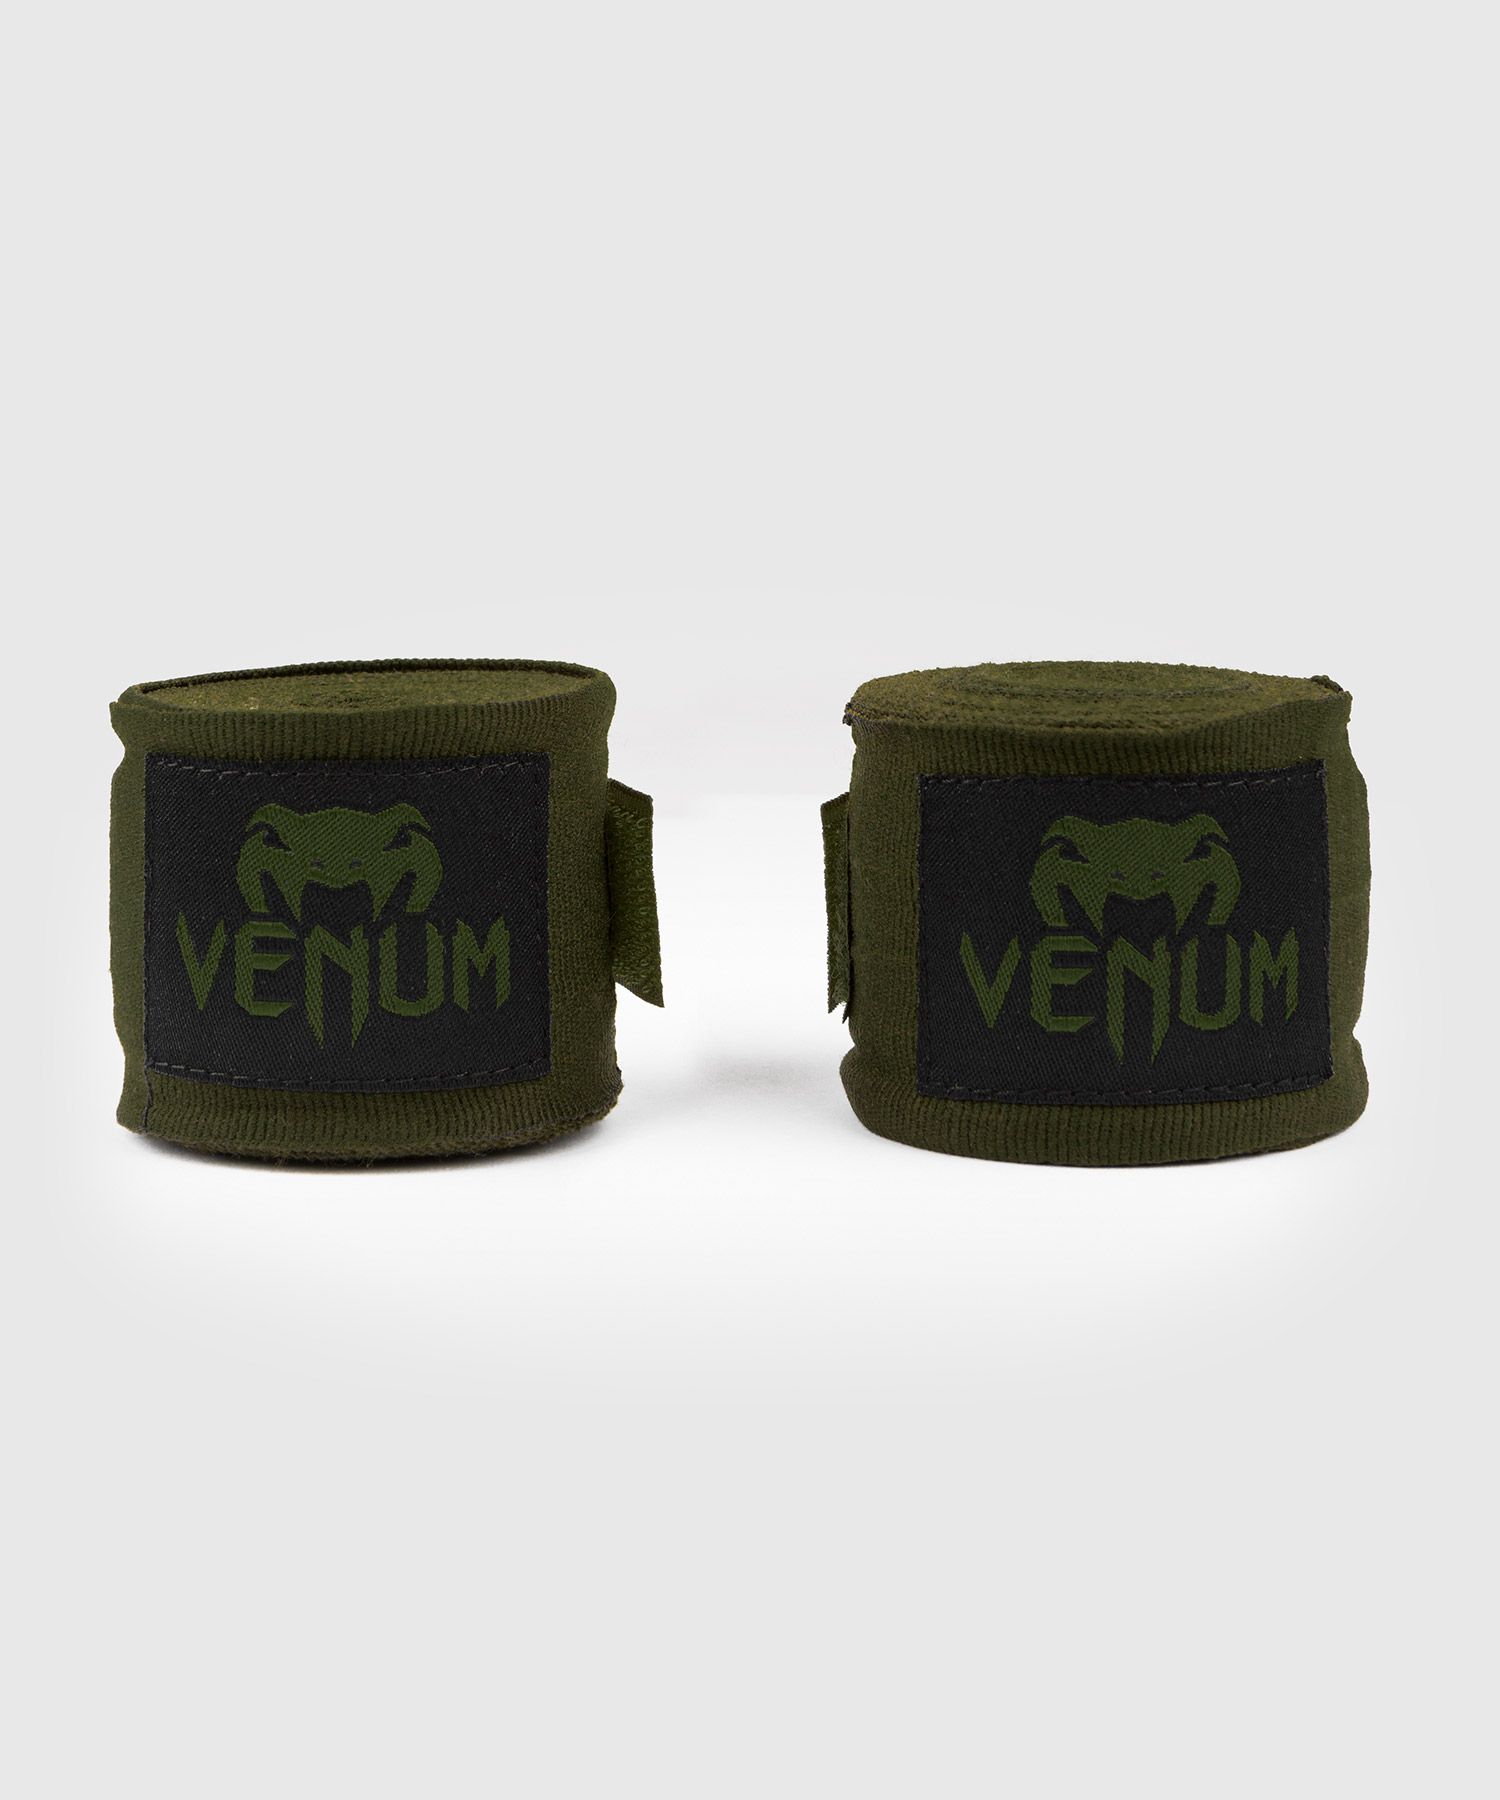 Venum Kontact Boxing Handwraps - 4.5m - Khaki/Black